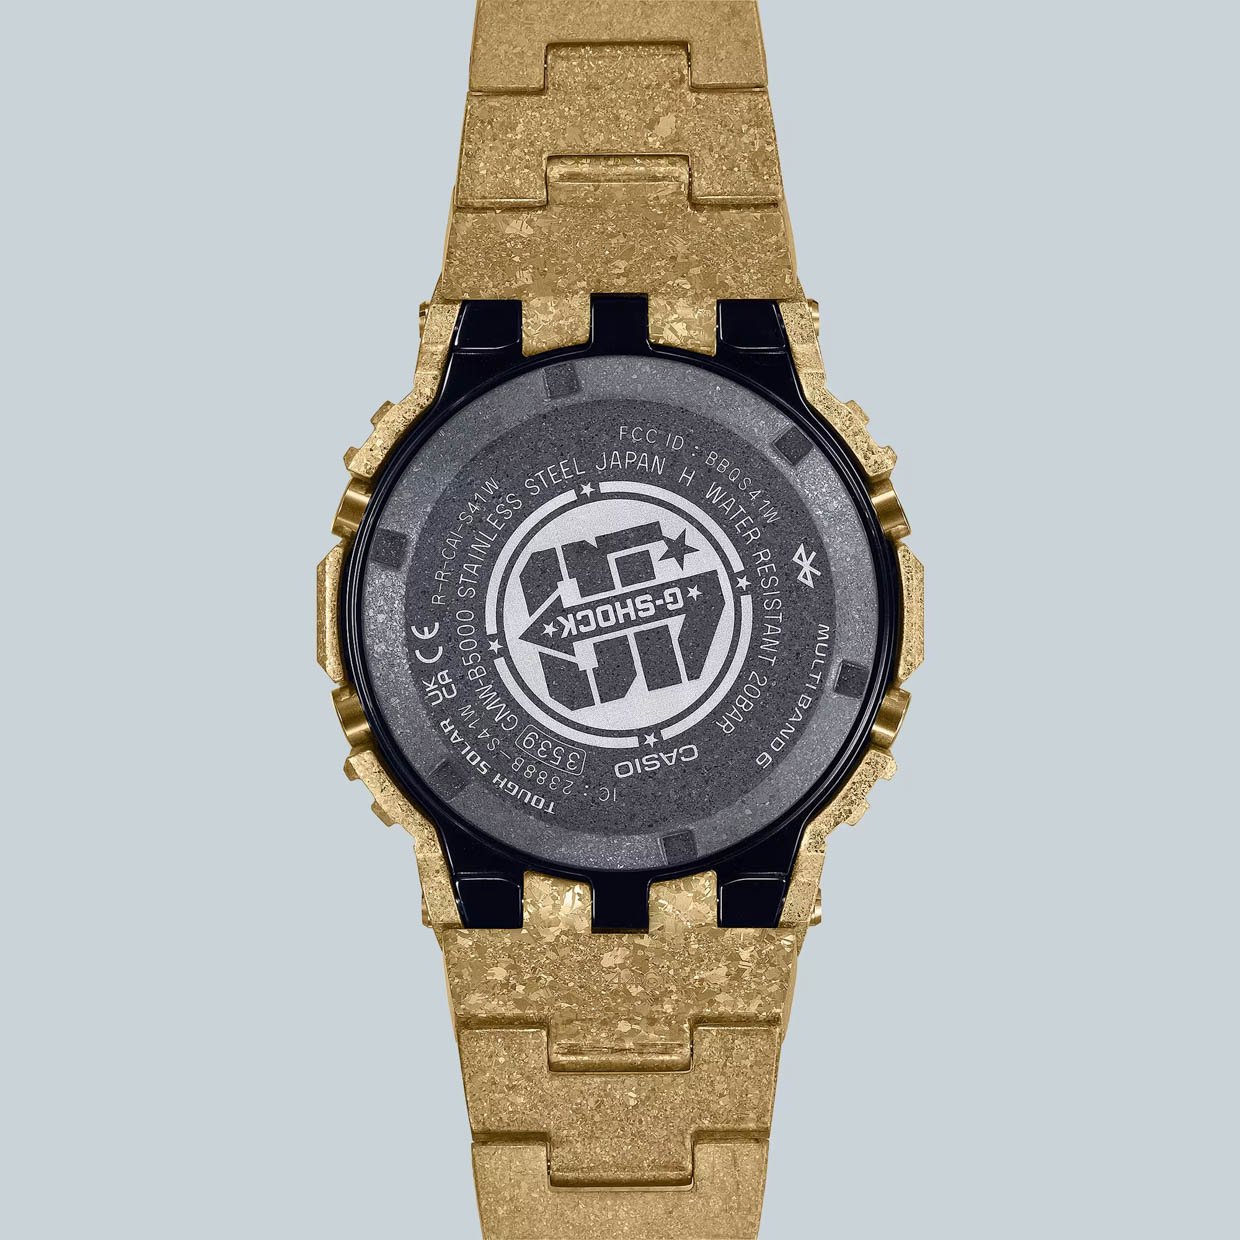 G-SHOCK Recrystallized Series Watches